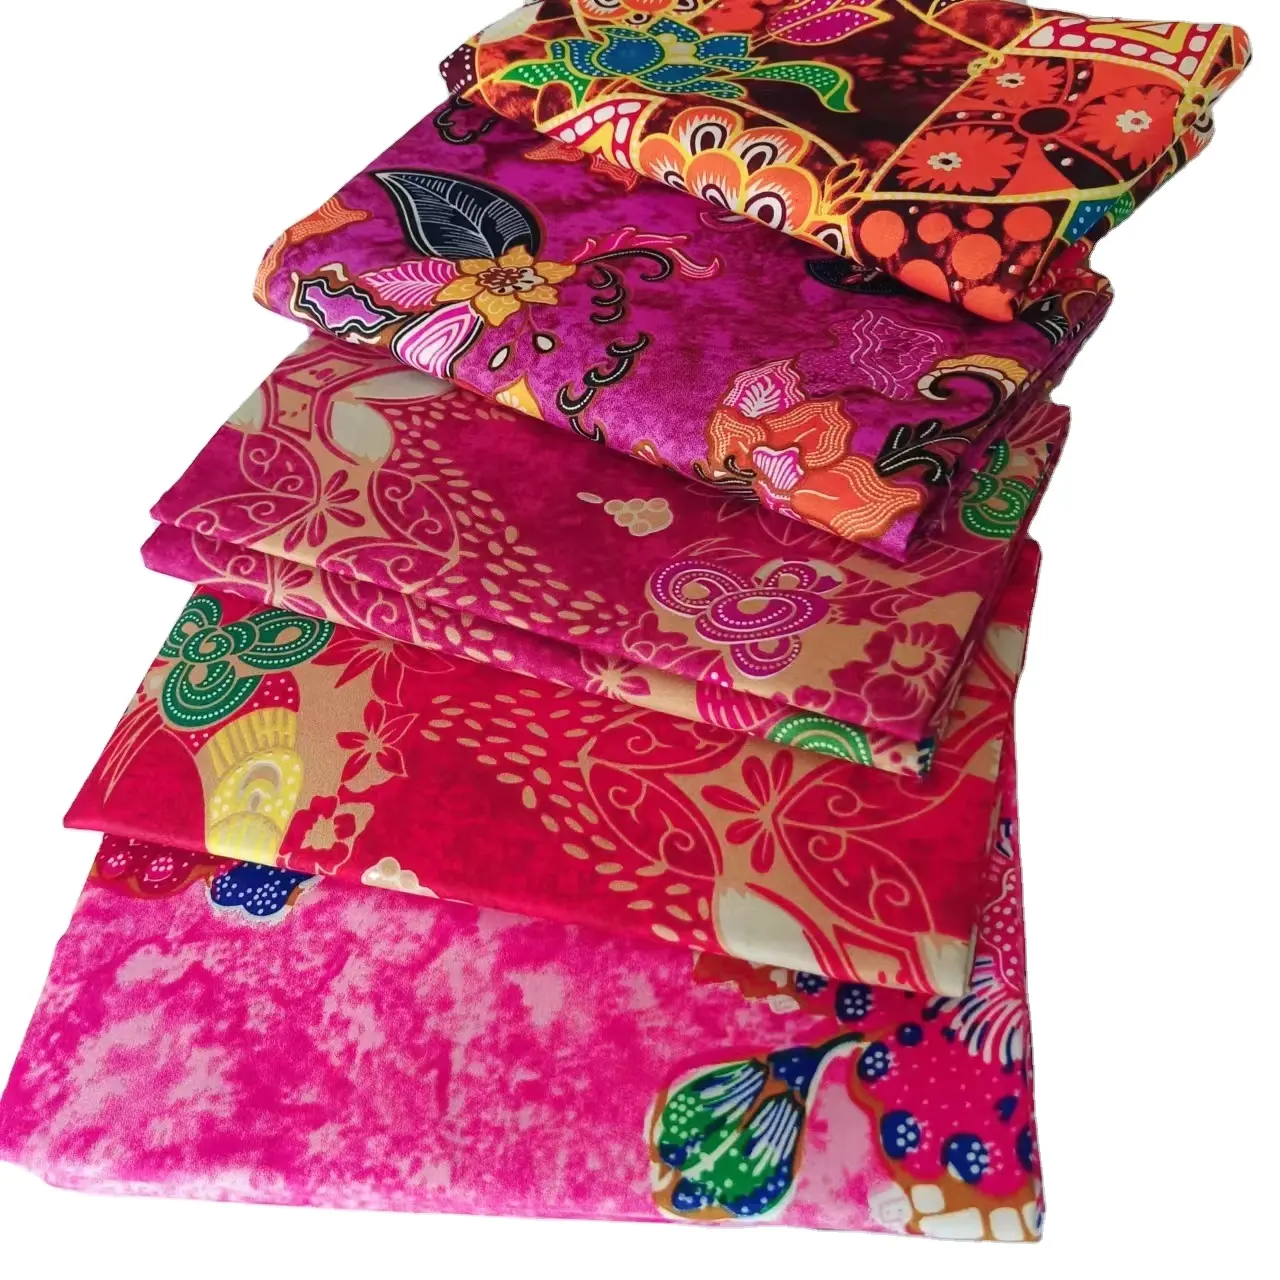 Precio barato de fábrica Sarong/ batik poliéster impreso tradicional batik tela tubo falda sarong Asia vestido tradicional tela